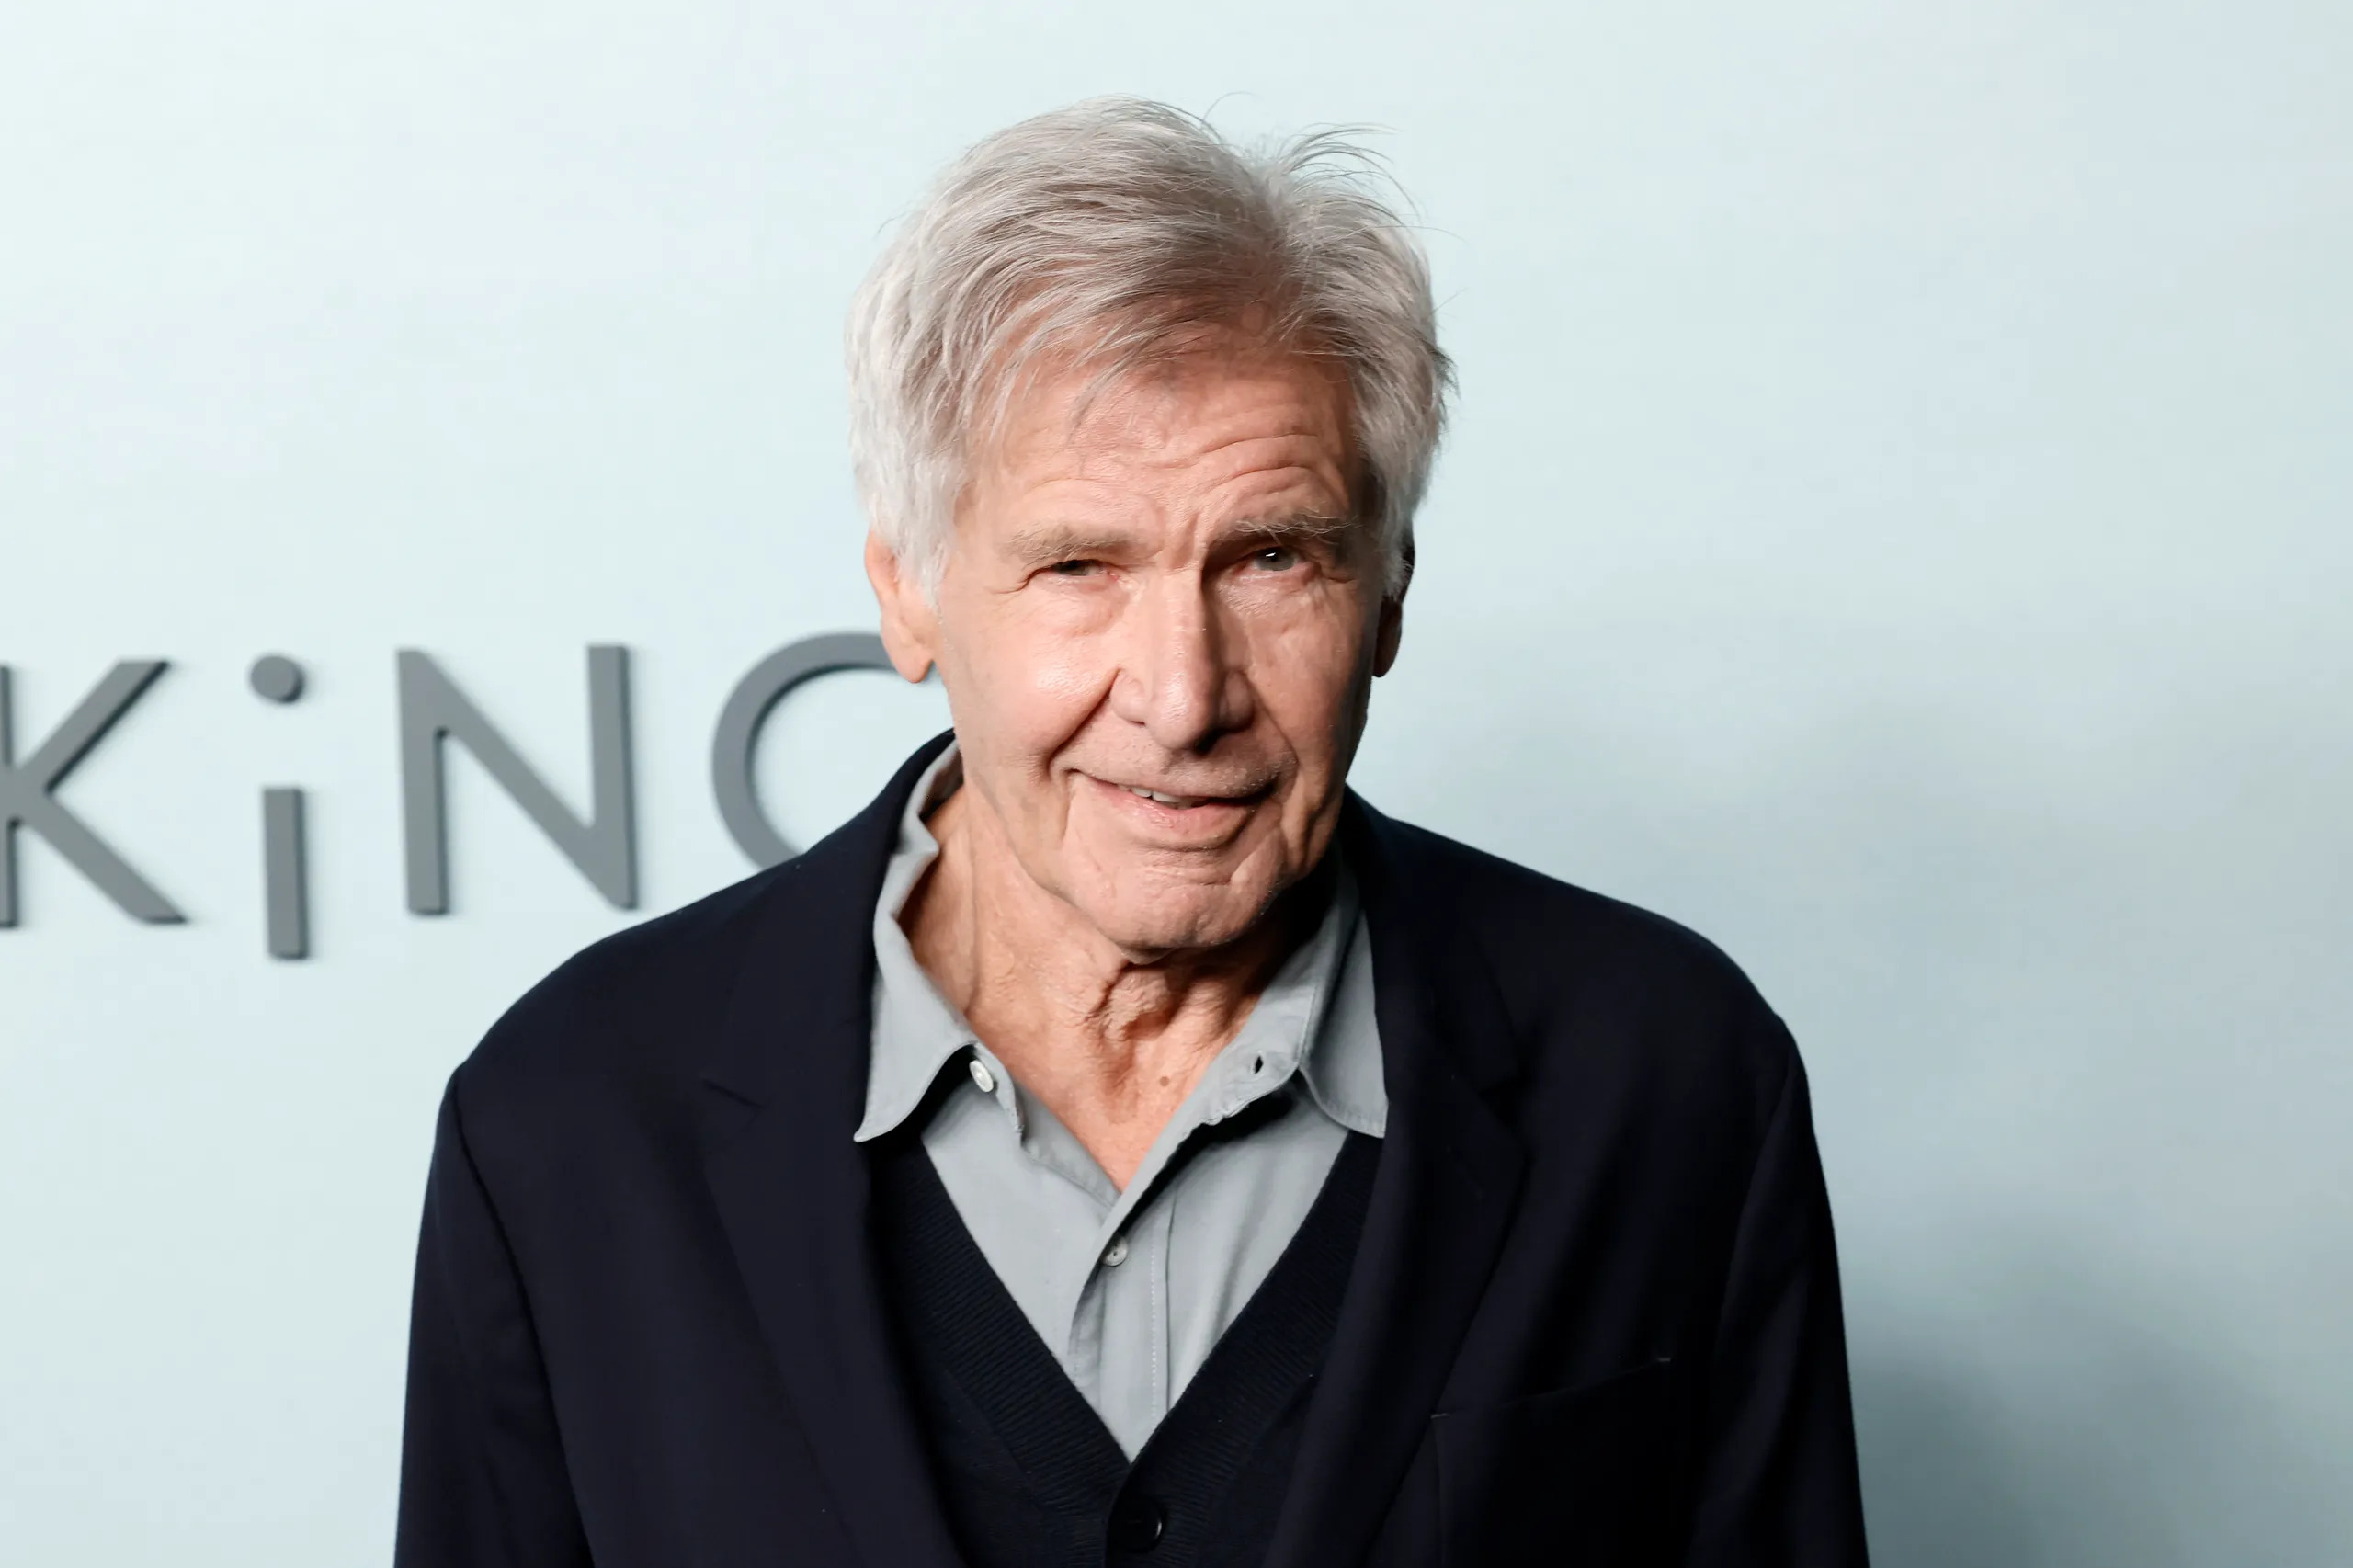 Harrison Ford's net worth